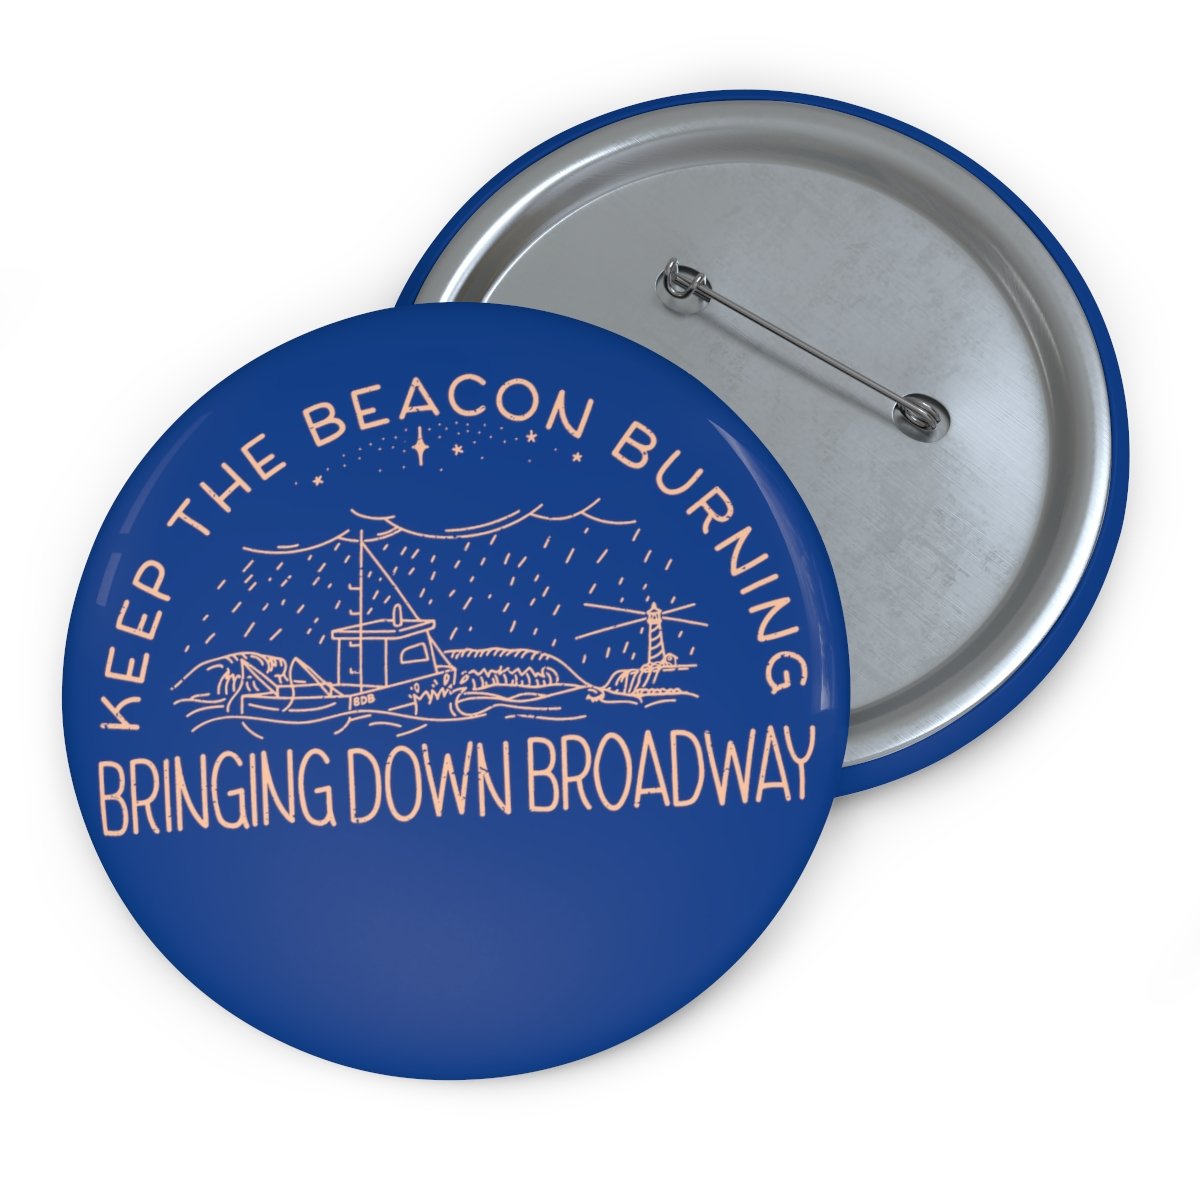 Bringing Down Broadway – Beacon Pin Buttons (Royal Blue)